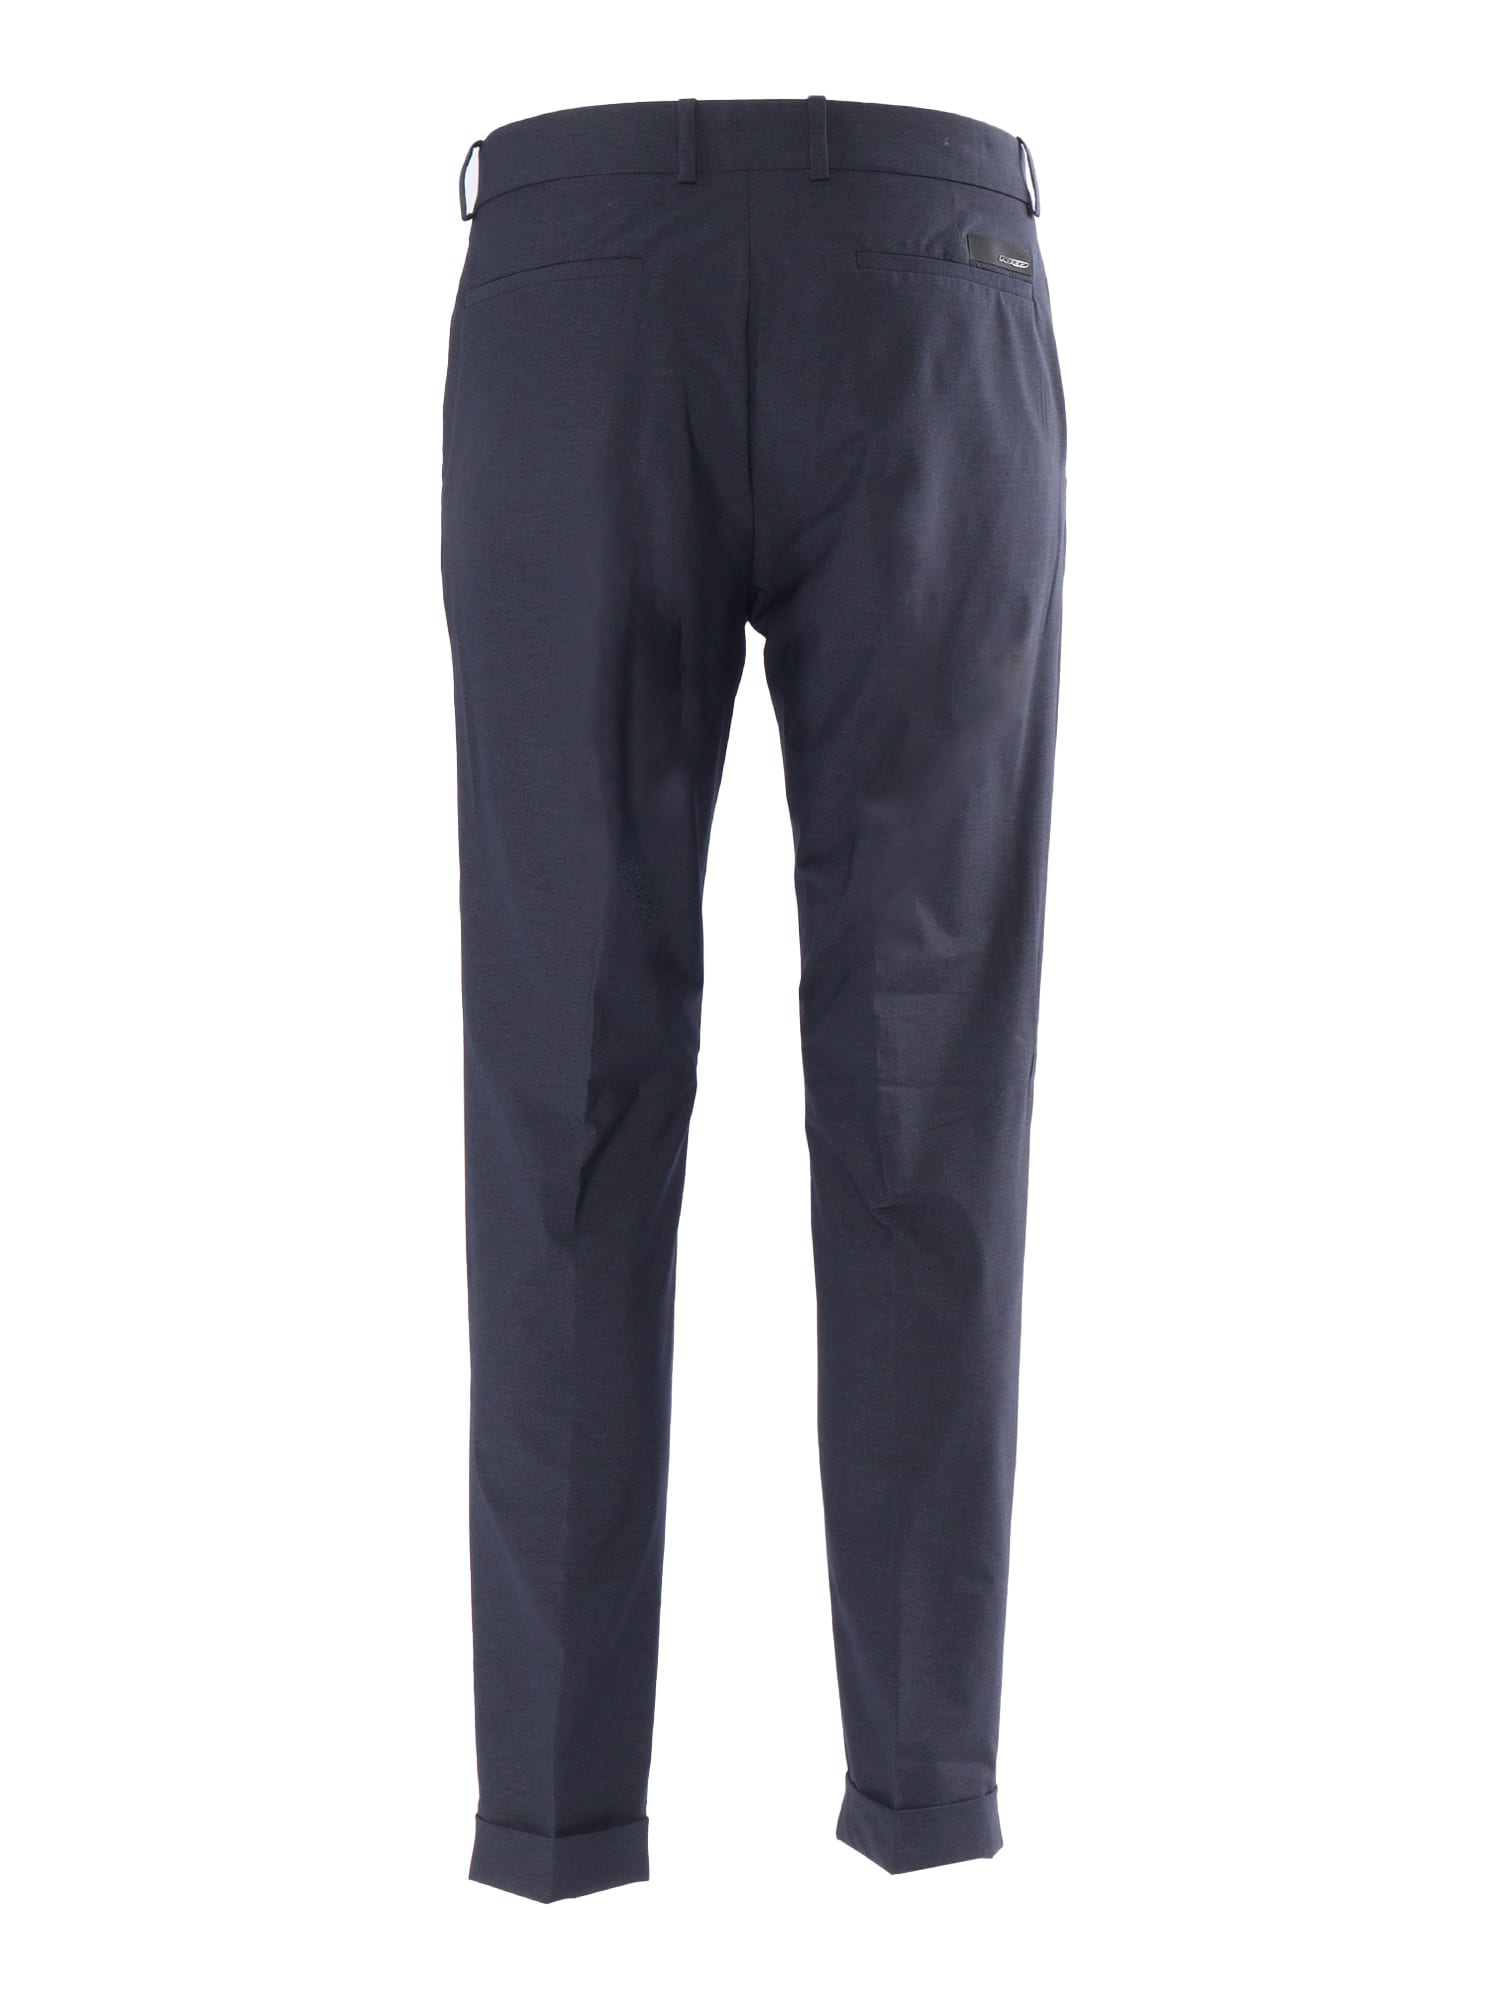 Shop Rrd - Roberto Ricci Design Extralight Blue Chino Trousers